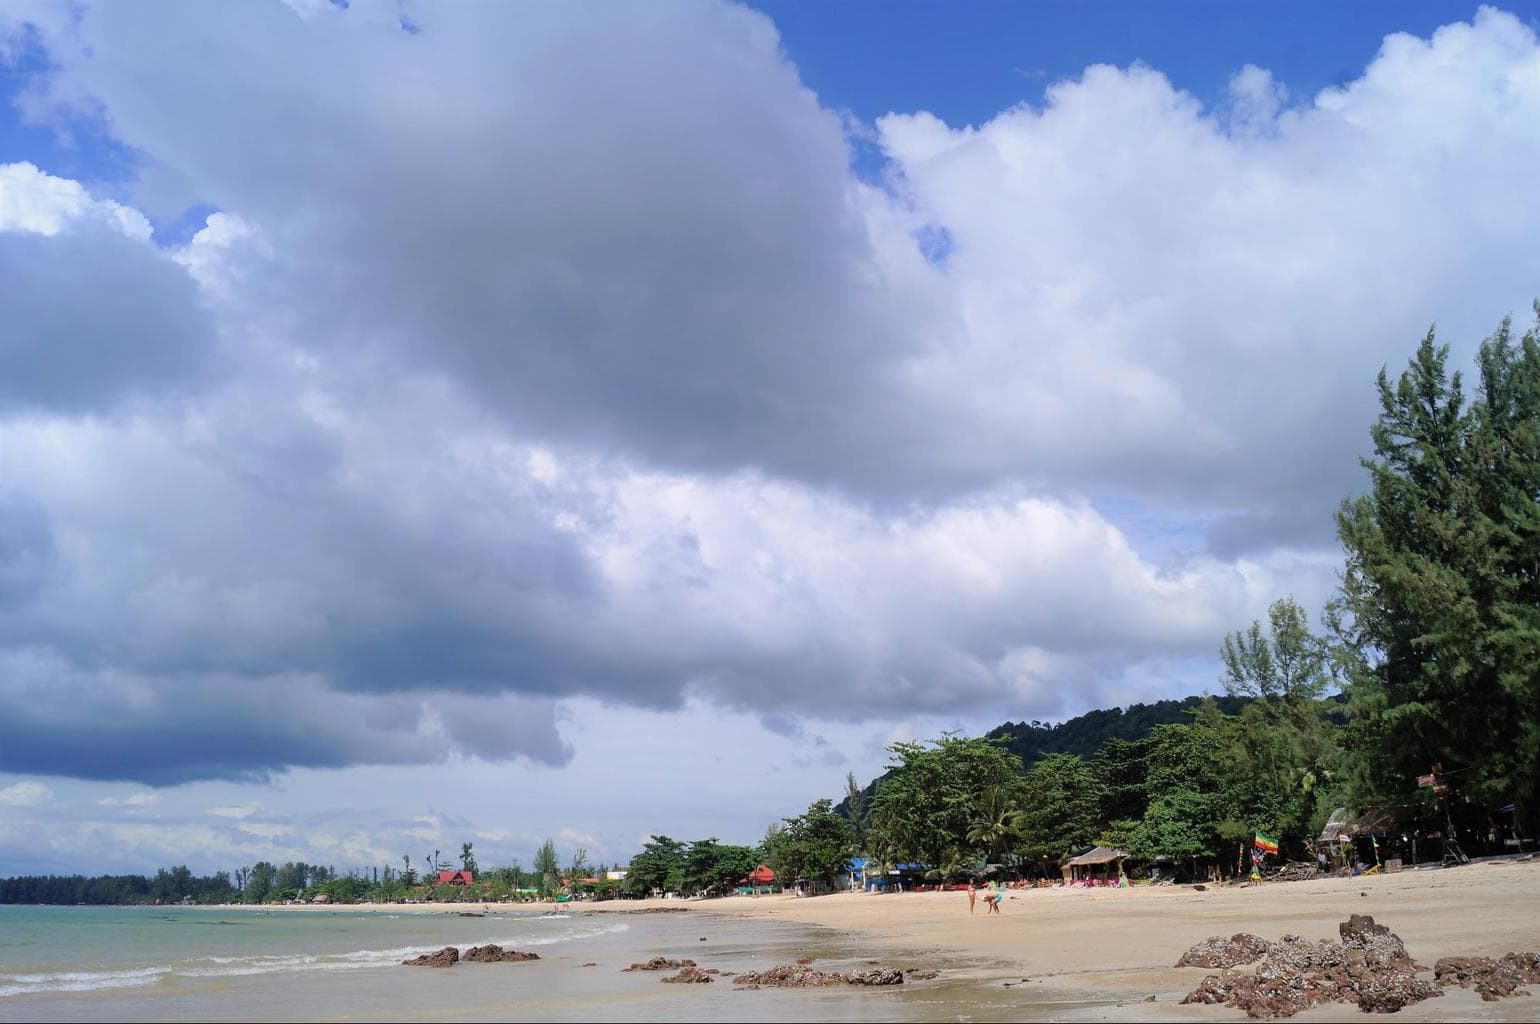 Klong Dao Beach, one of the best beaches in Thailand